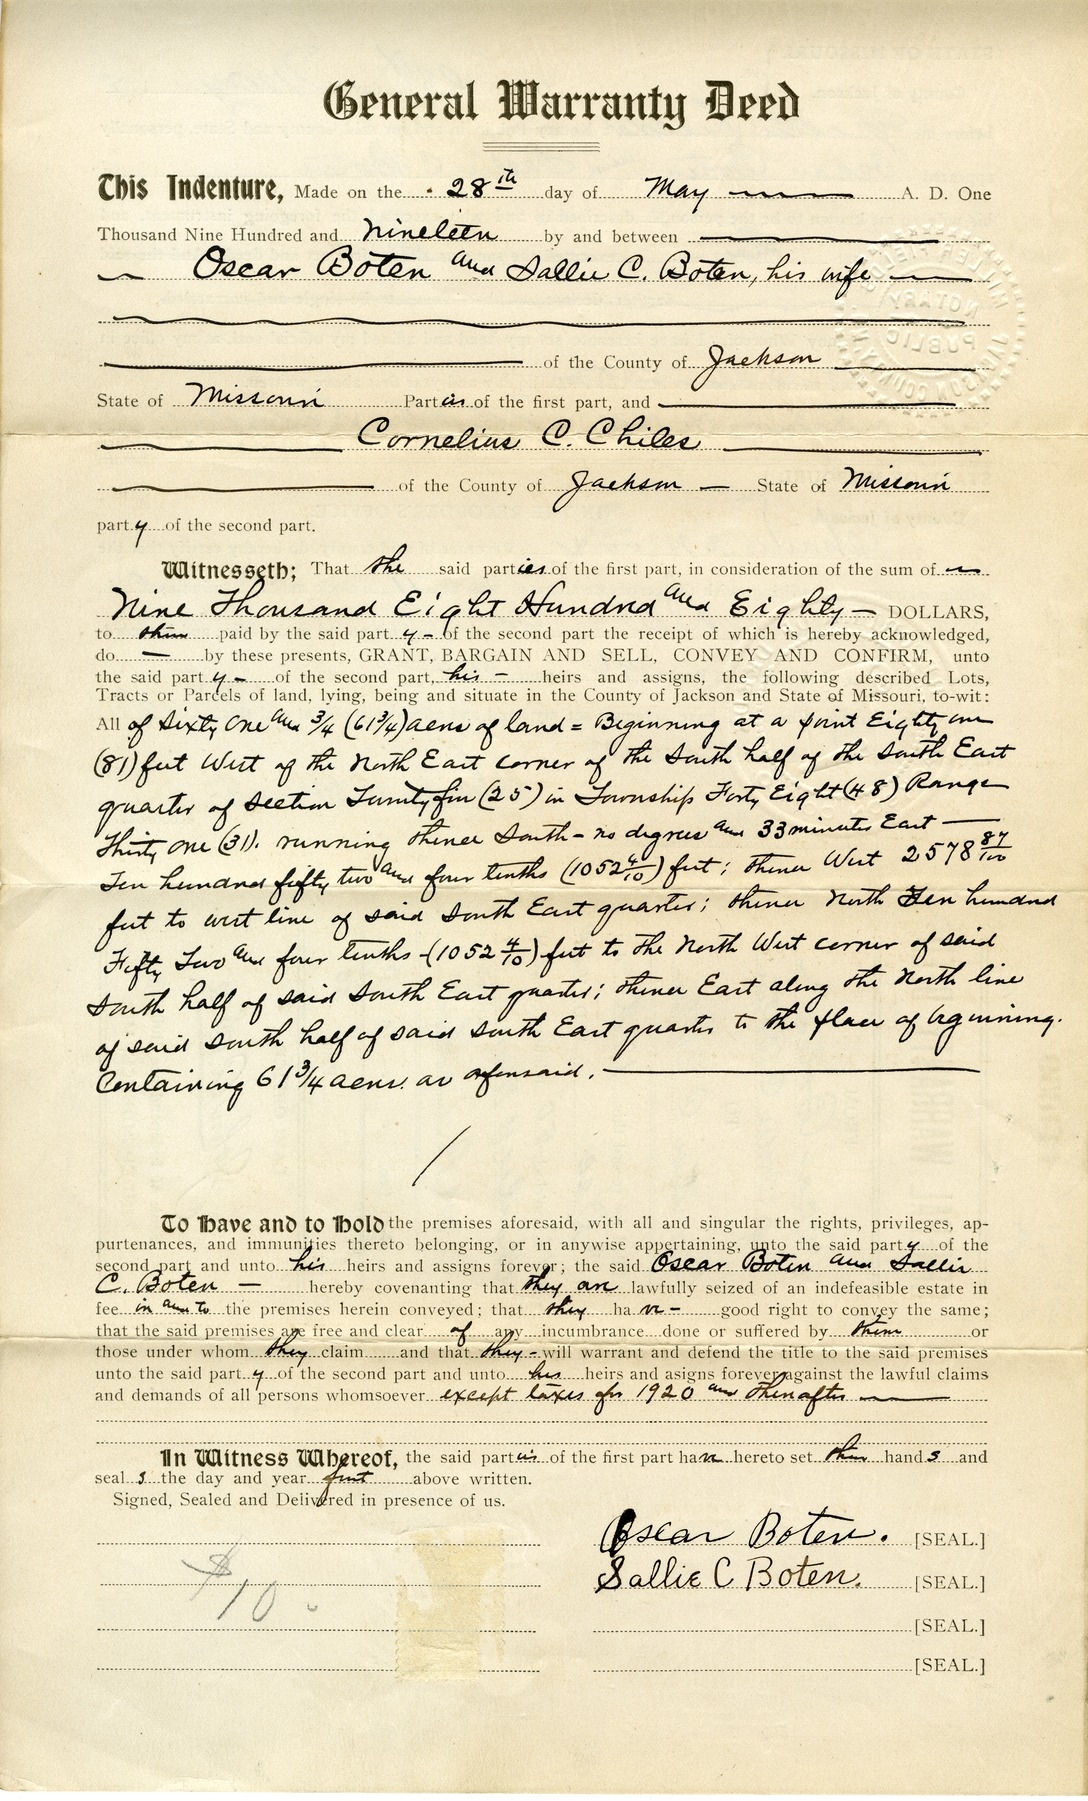 General Warranty Deed from Oscar Boten and Sallie C. Boten to Cornelius C. Chiles